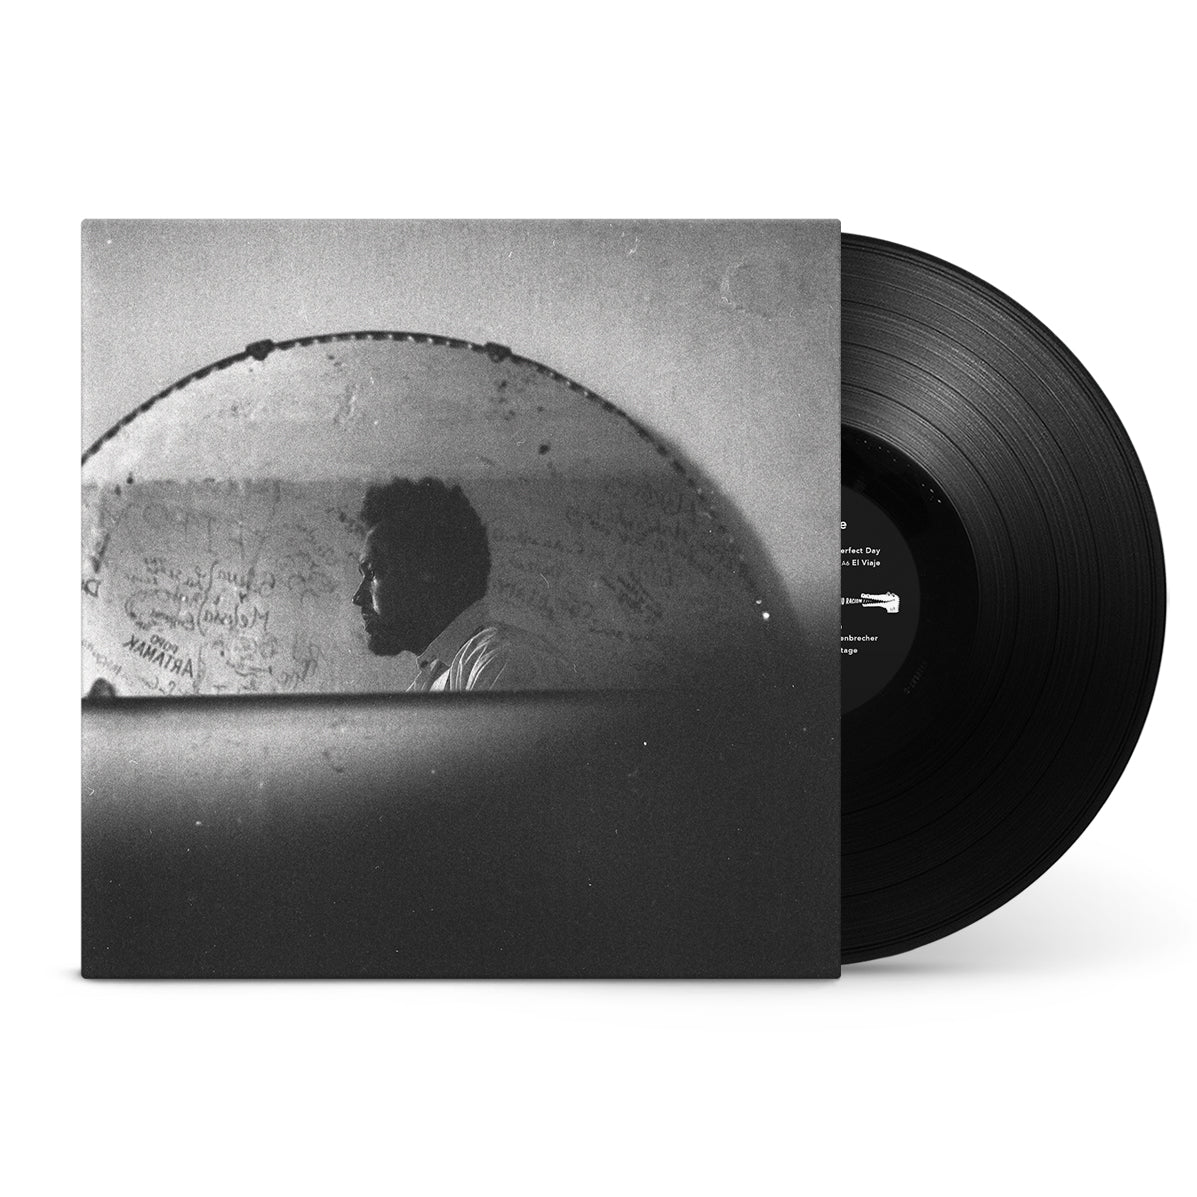 phaeb - phonographie [Vinyl]